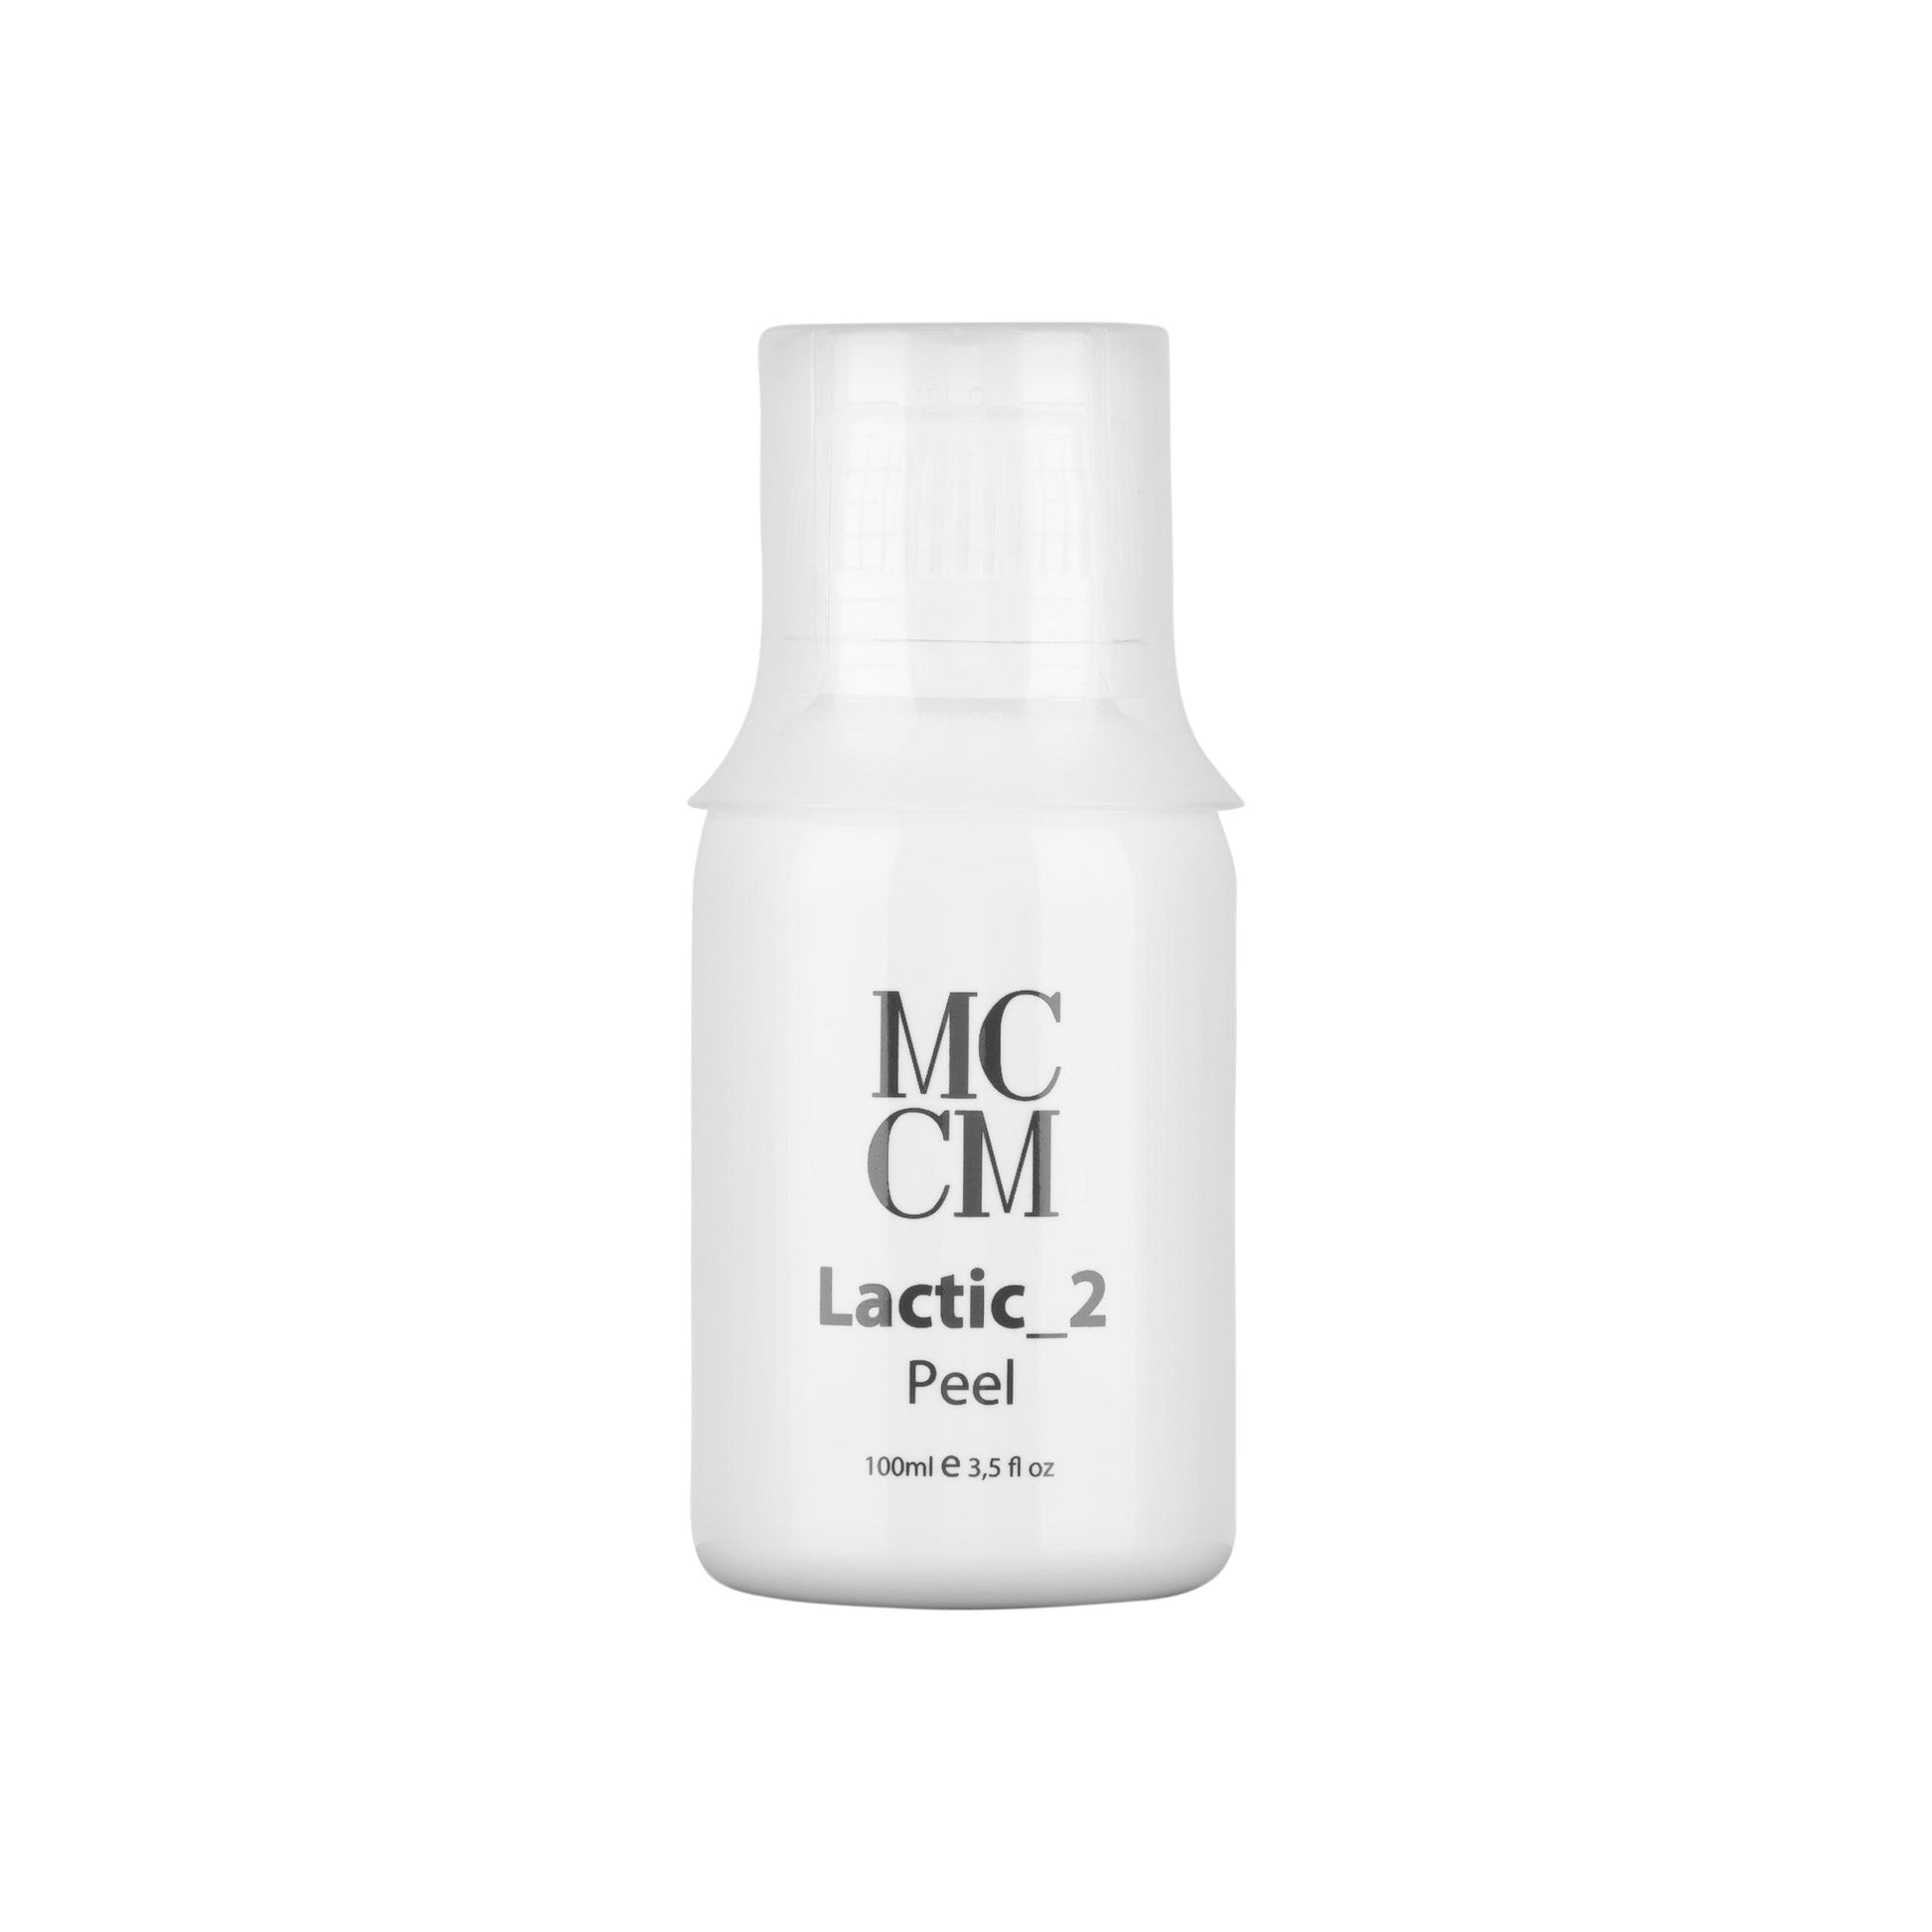 Lactic_2 Peel - MCCM Medical Cosmetics